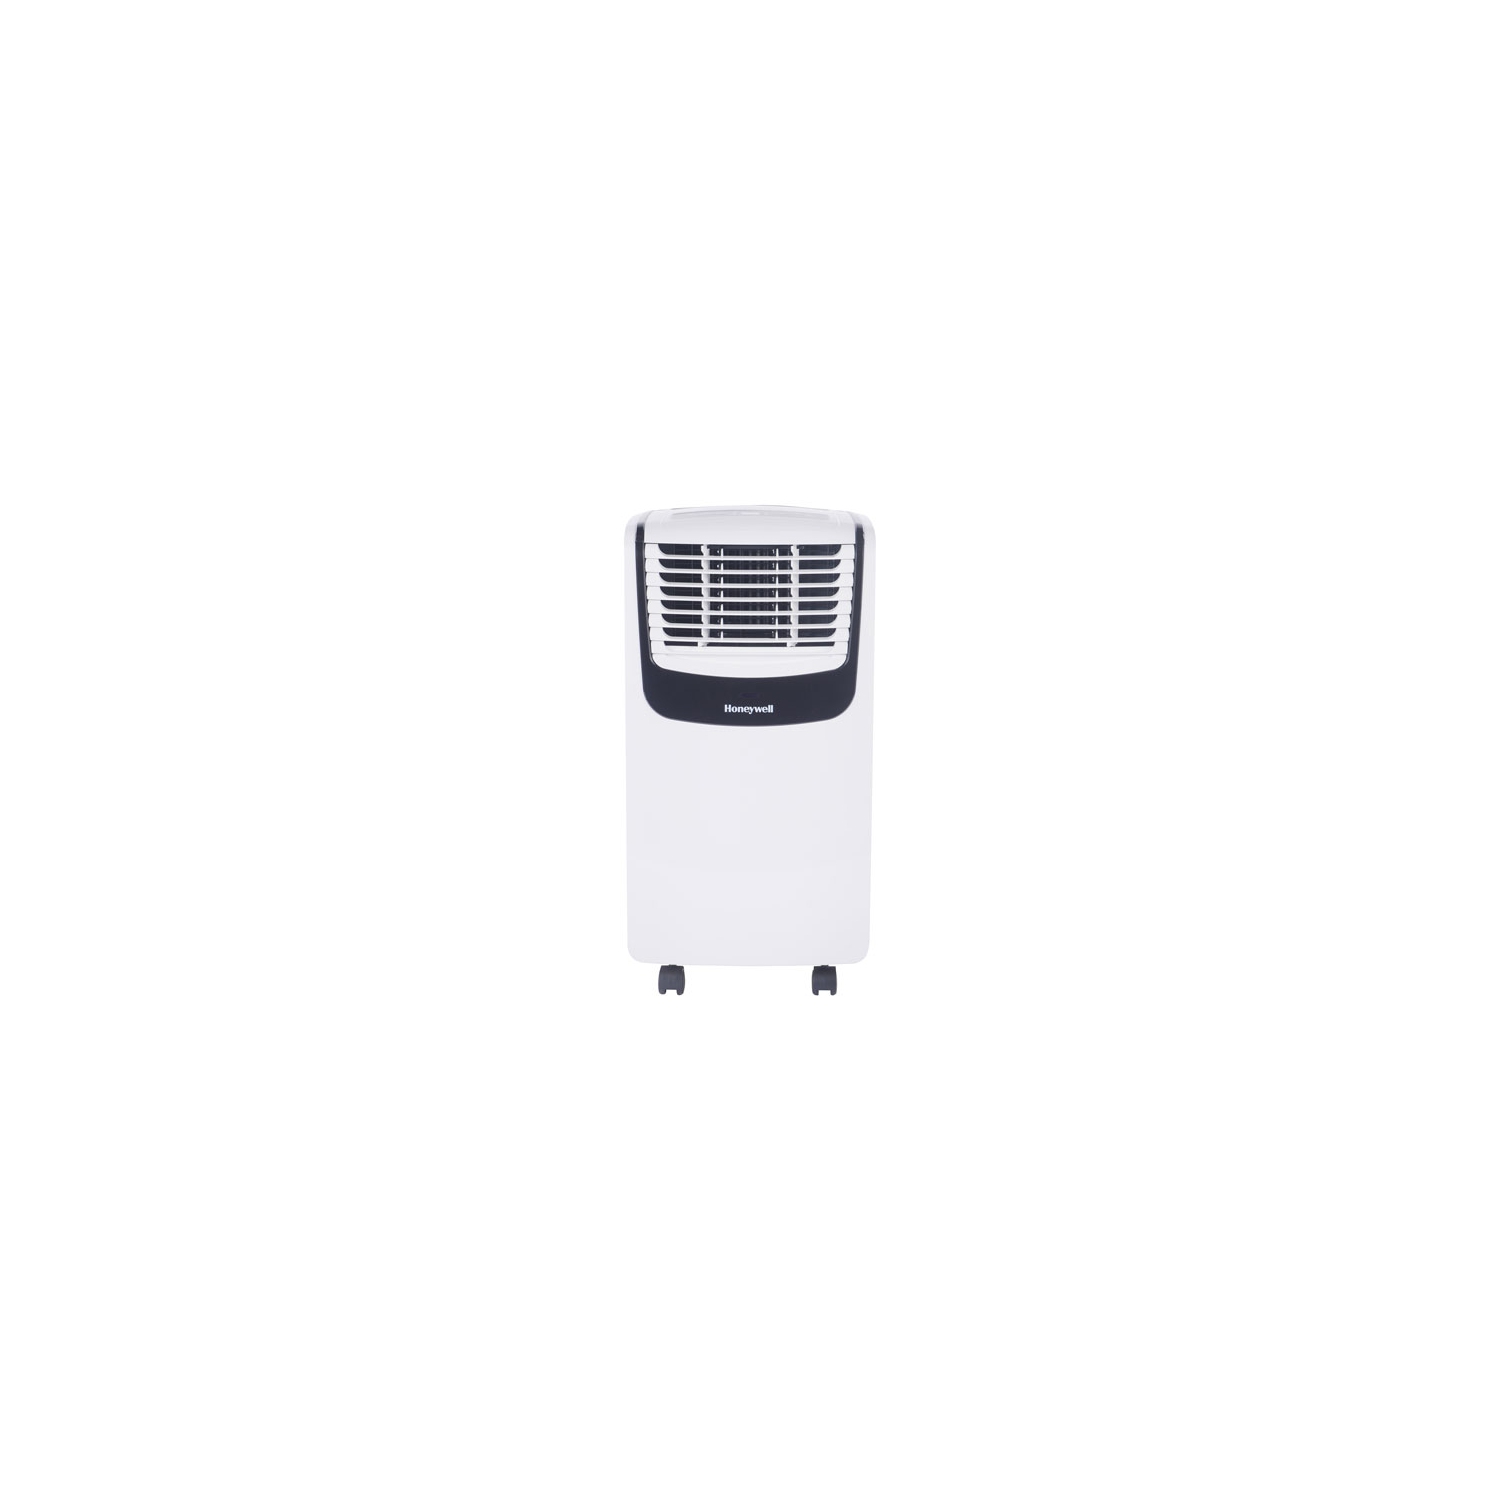 Refurbished (Good) - Honeywell Portable Air Conditioner - 10000 BTU (SACC 6800 BTU) - White/Black